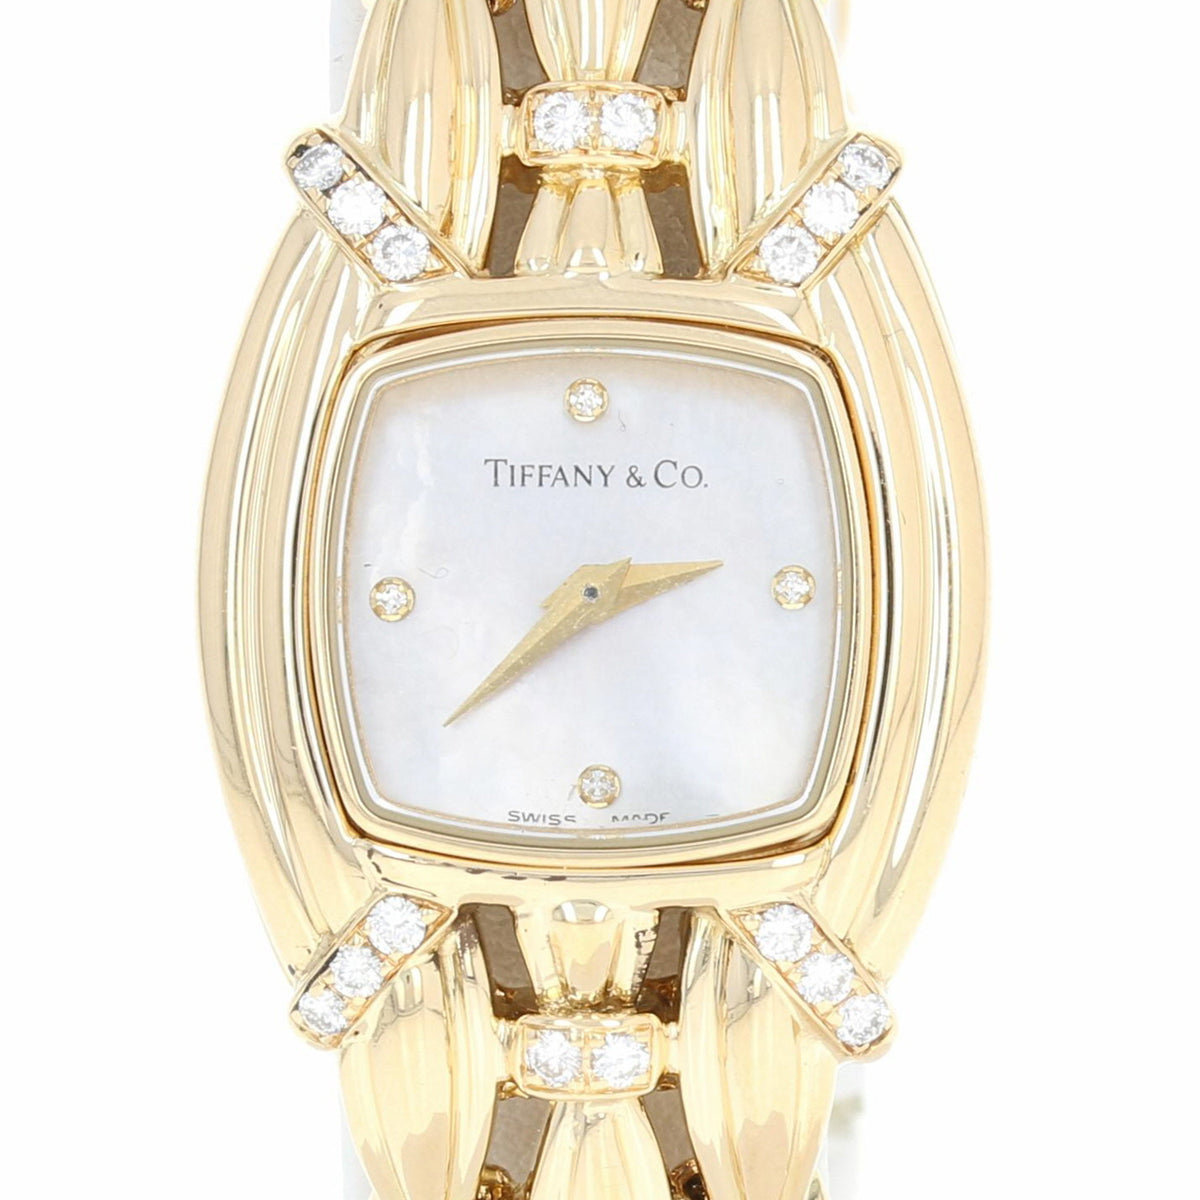 Tiffany & Co. Ladies Diamond Quartz Watch